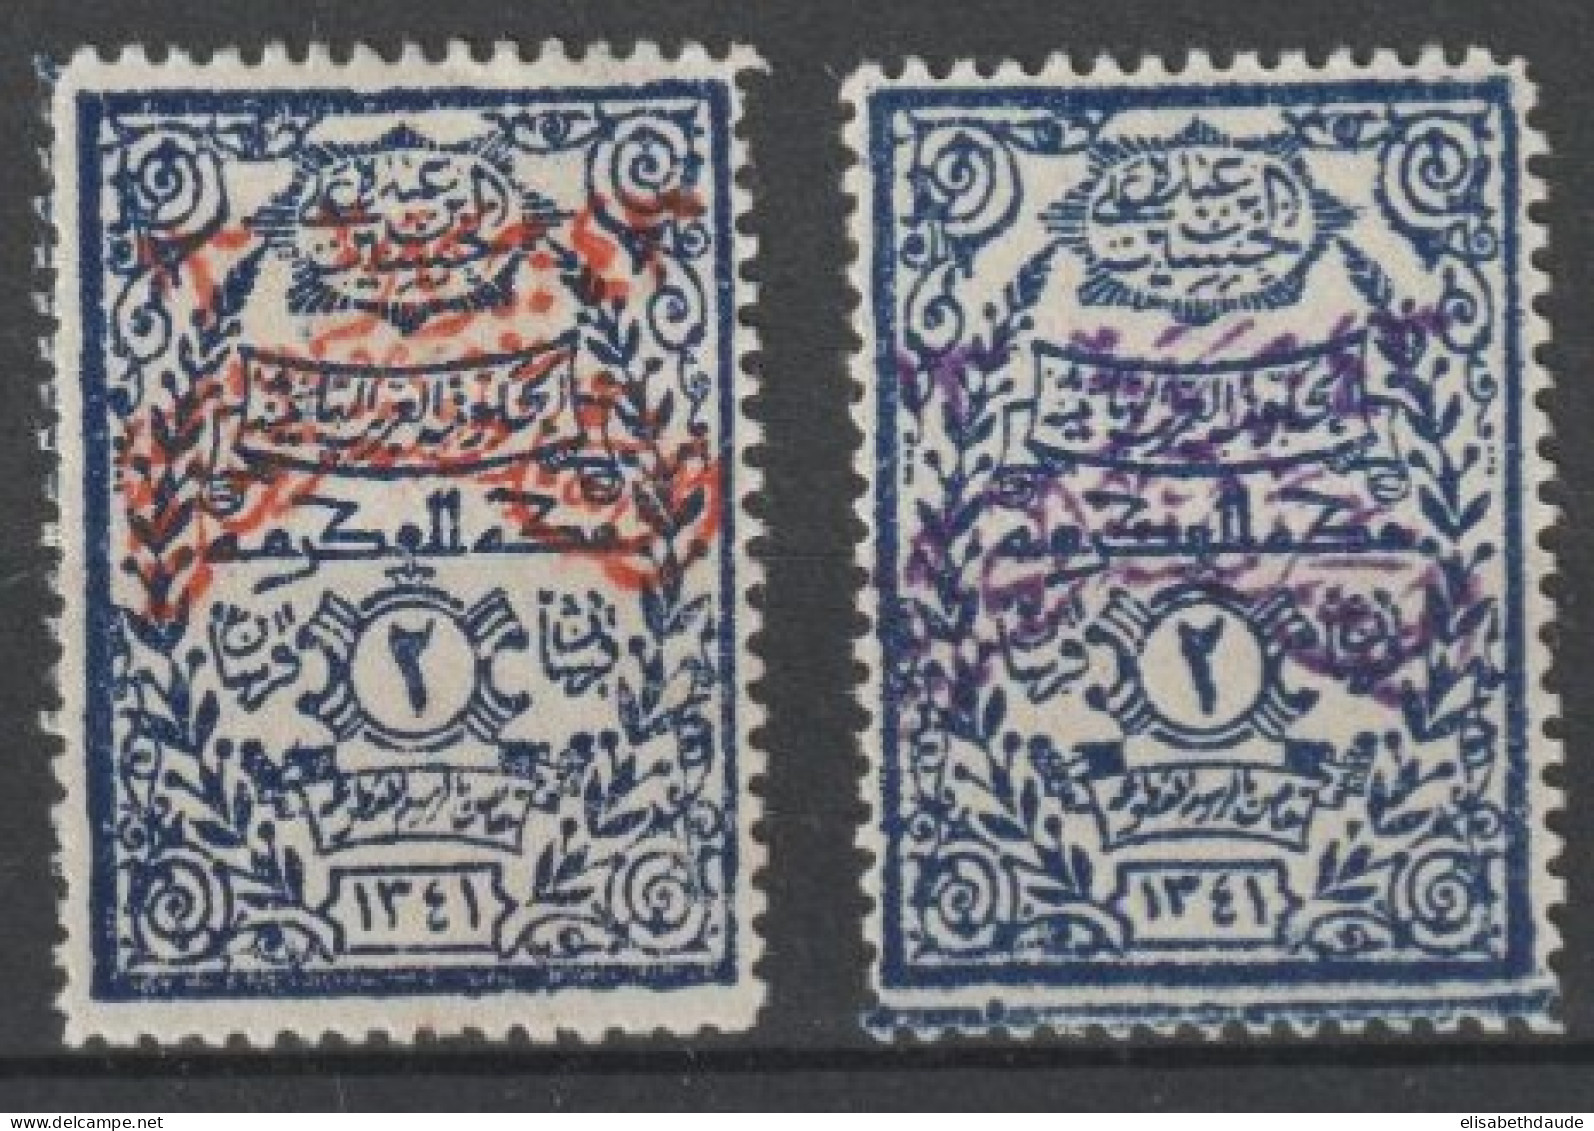 1925 - ROYAUME NEDJED (ARABIE SAOUDITE) - YVERT N°16 * MH SURCHARGE VIOLETTE ET ROUGE (MICHEL 11a/11c) - COTE = 80 EUR - Saudi Arabia